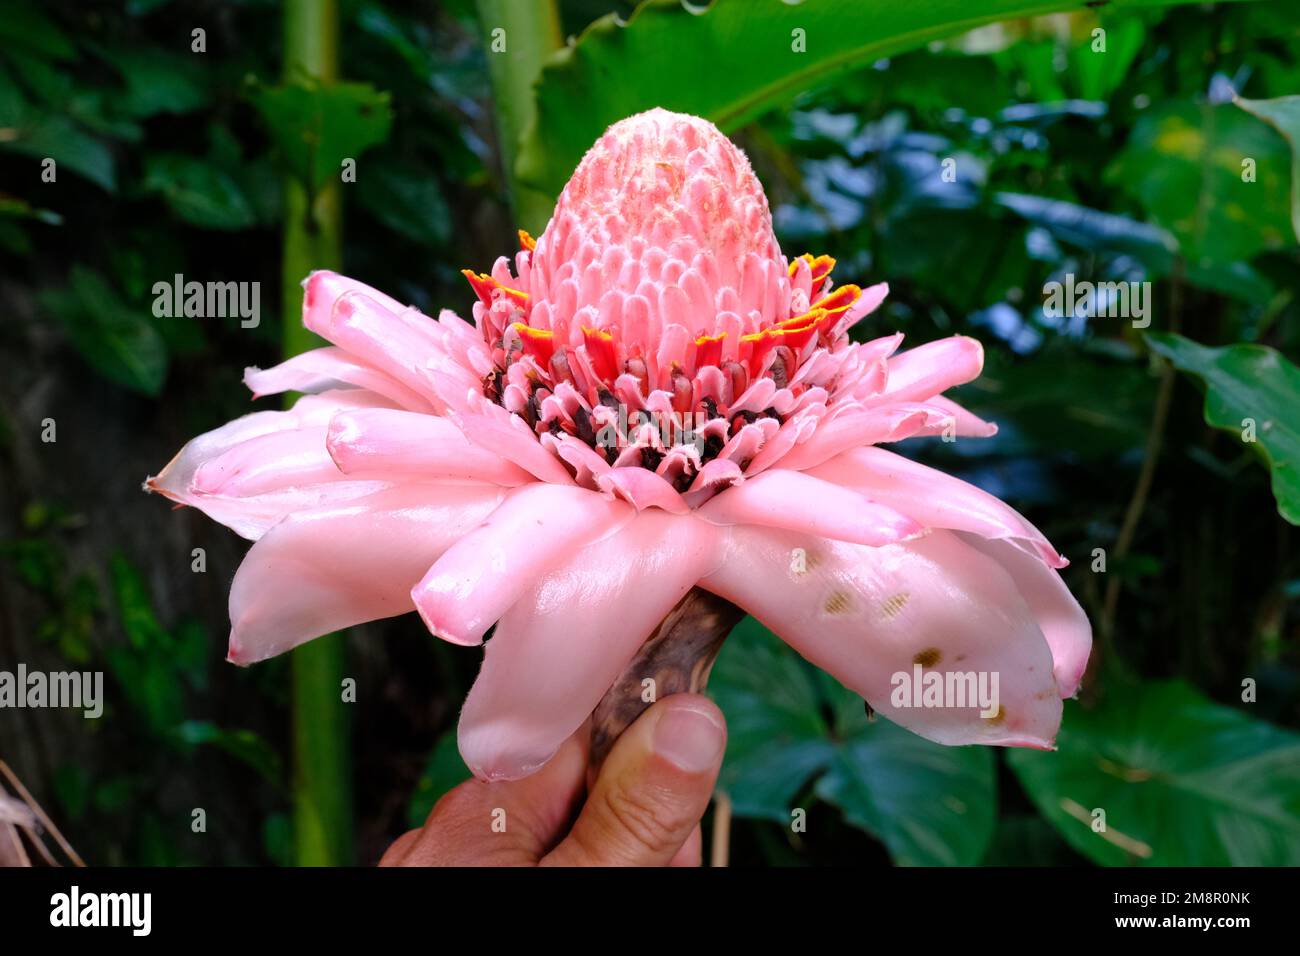 Indonesien Bali - Etlingera elatior - Ingwerblüte - Wildrogen Stockfoto